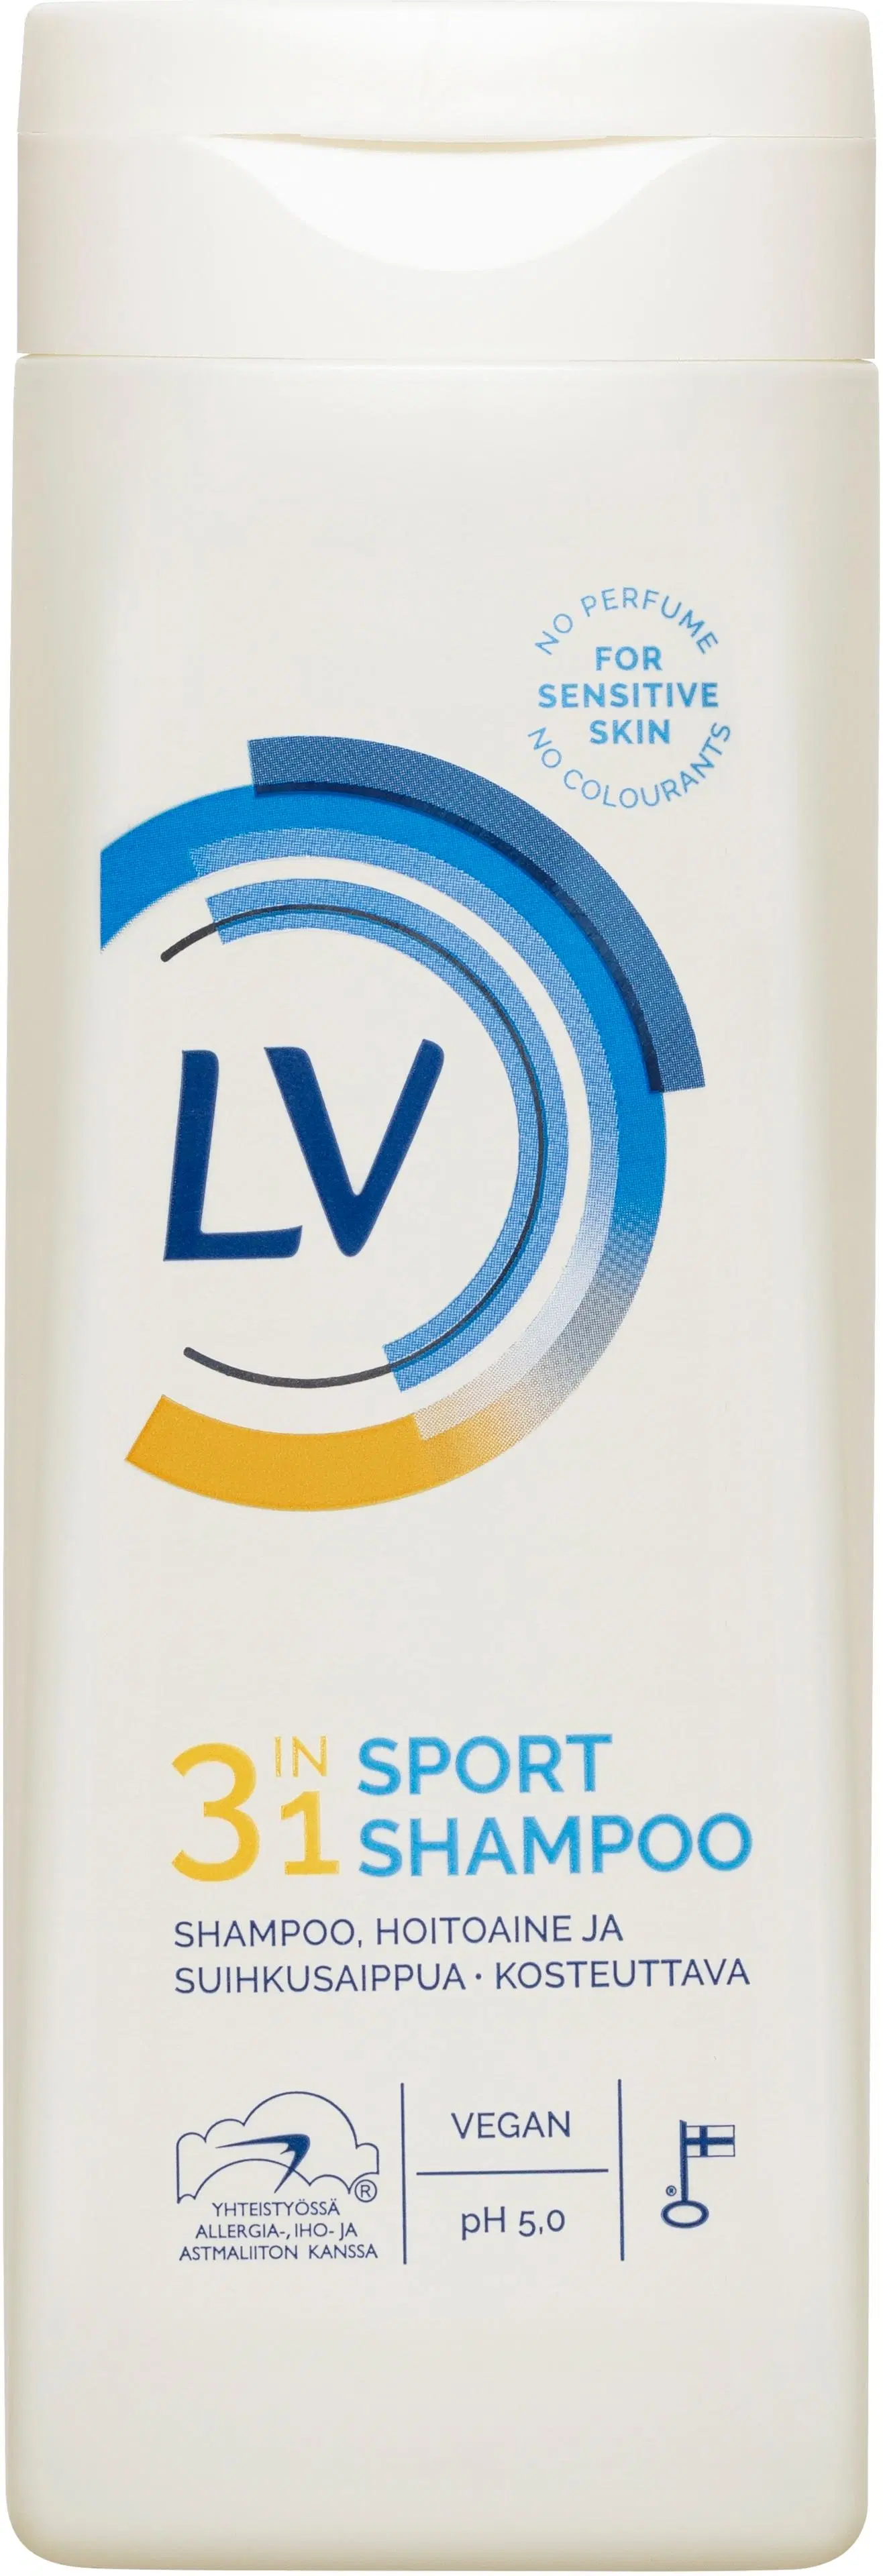 LV 250ml 3-in-1 sport shampoo